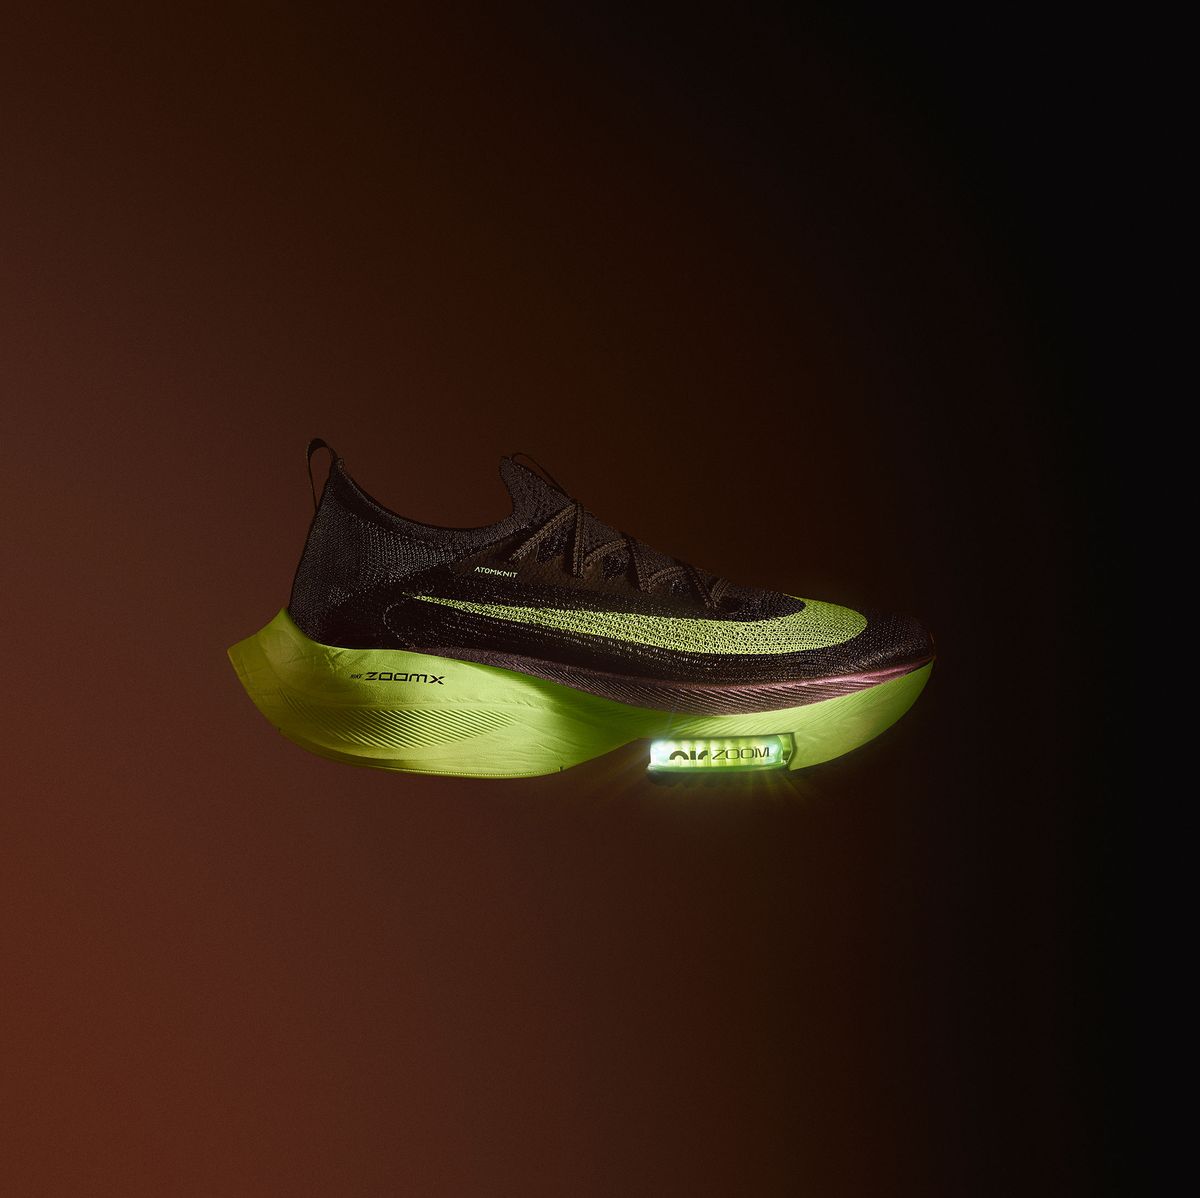 regeling Geleend krater Nike Air Zoom AlphaFly Next% $250 Running Shoe Wear Test Review